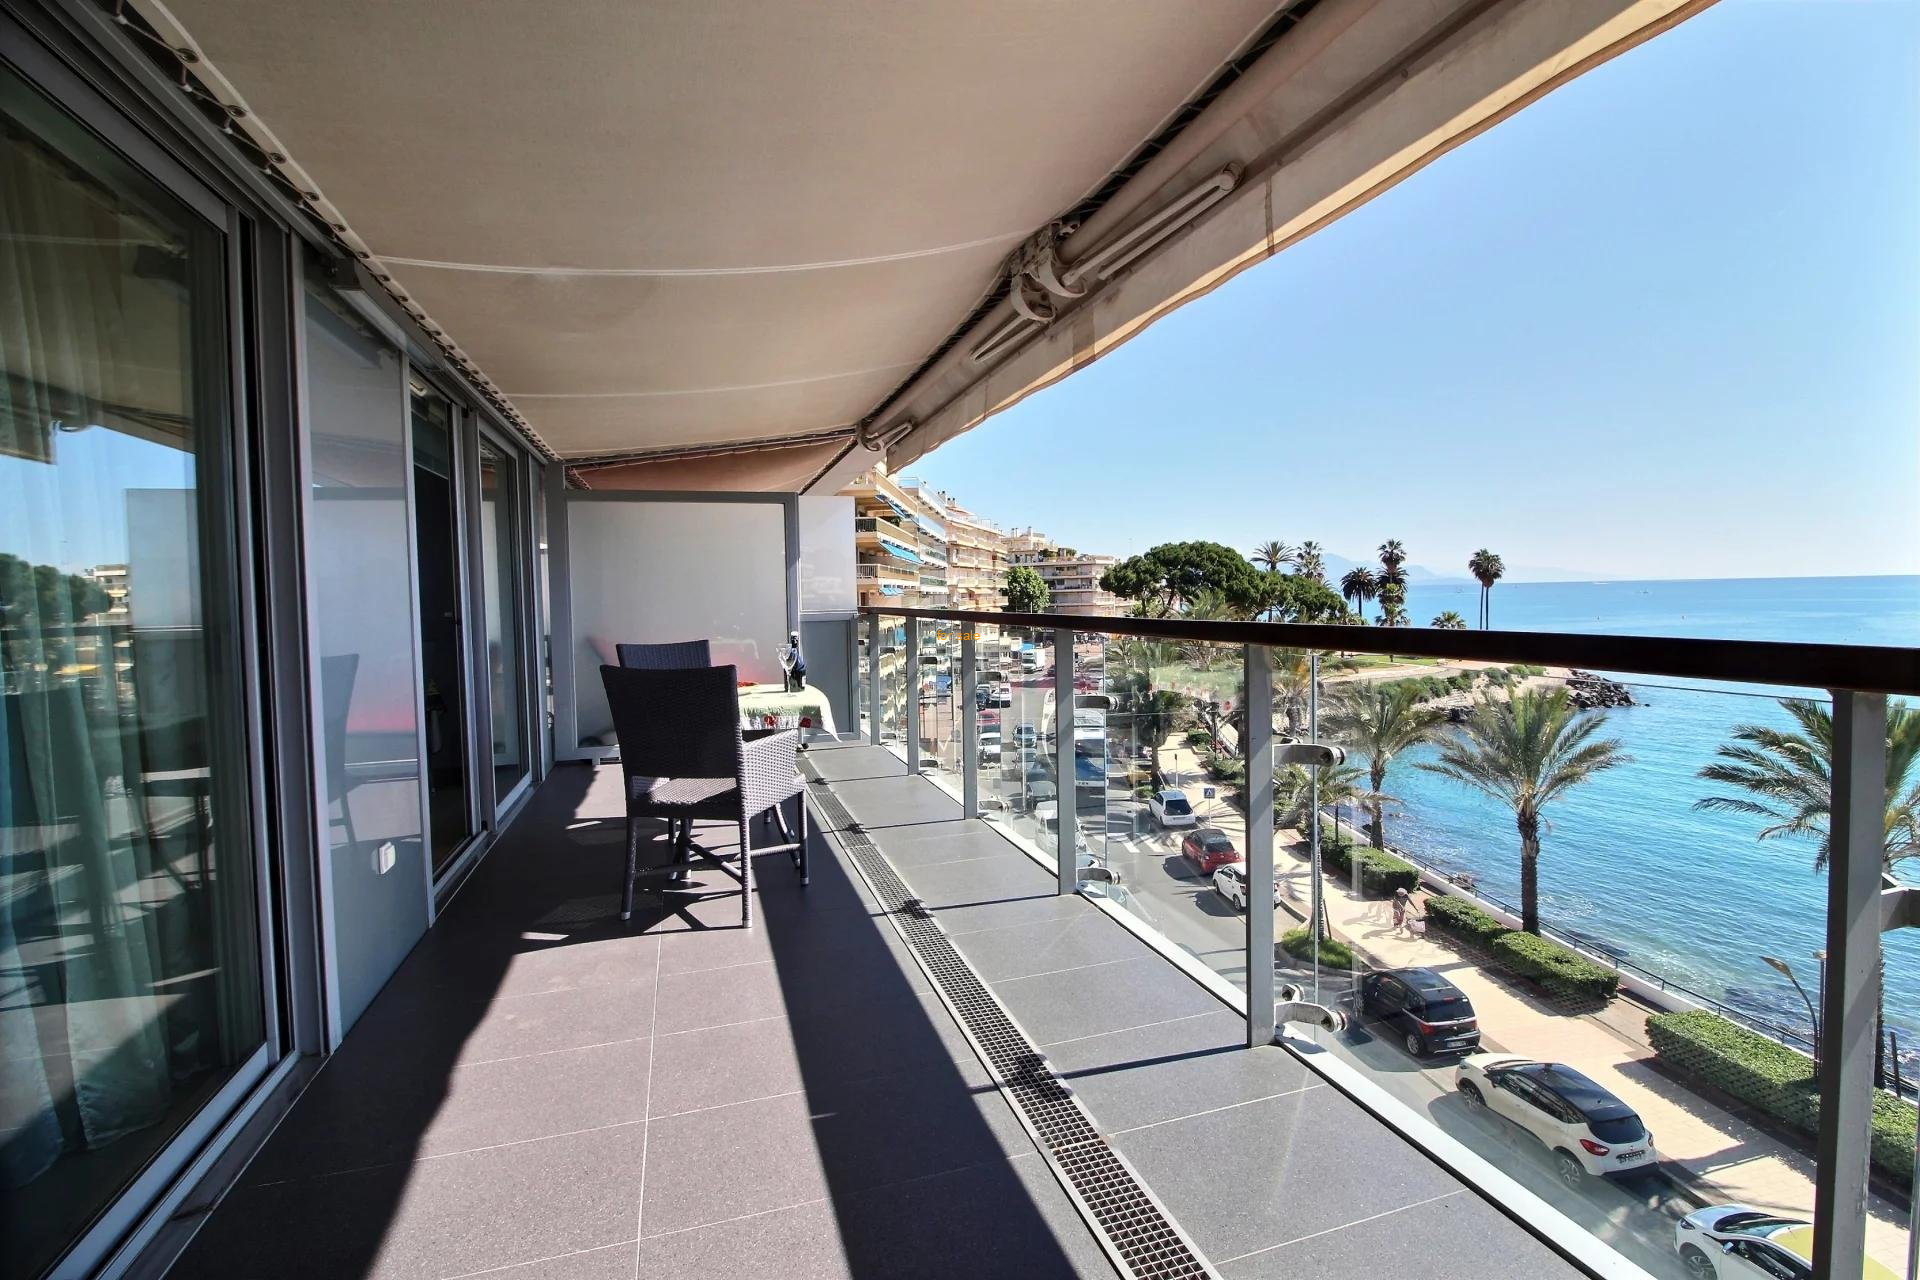 2 Bedroom apartment with panoramic sea view - Antibes Ilette